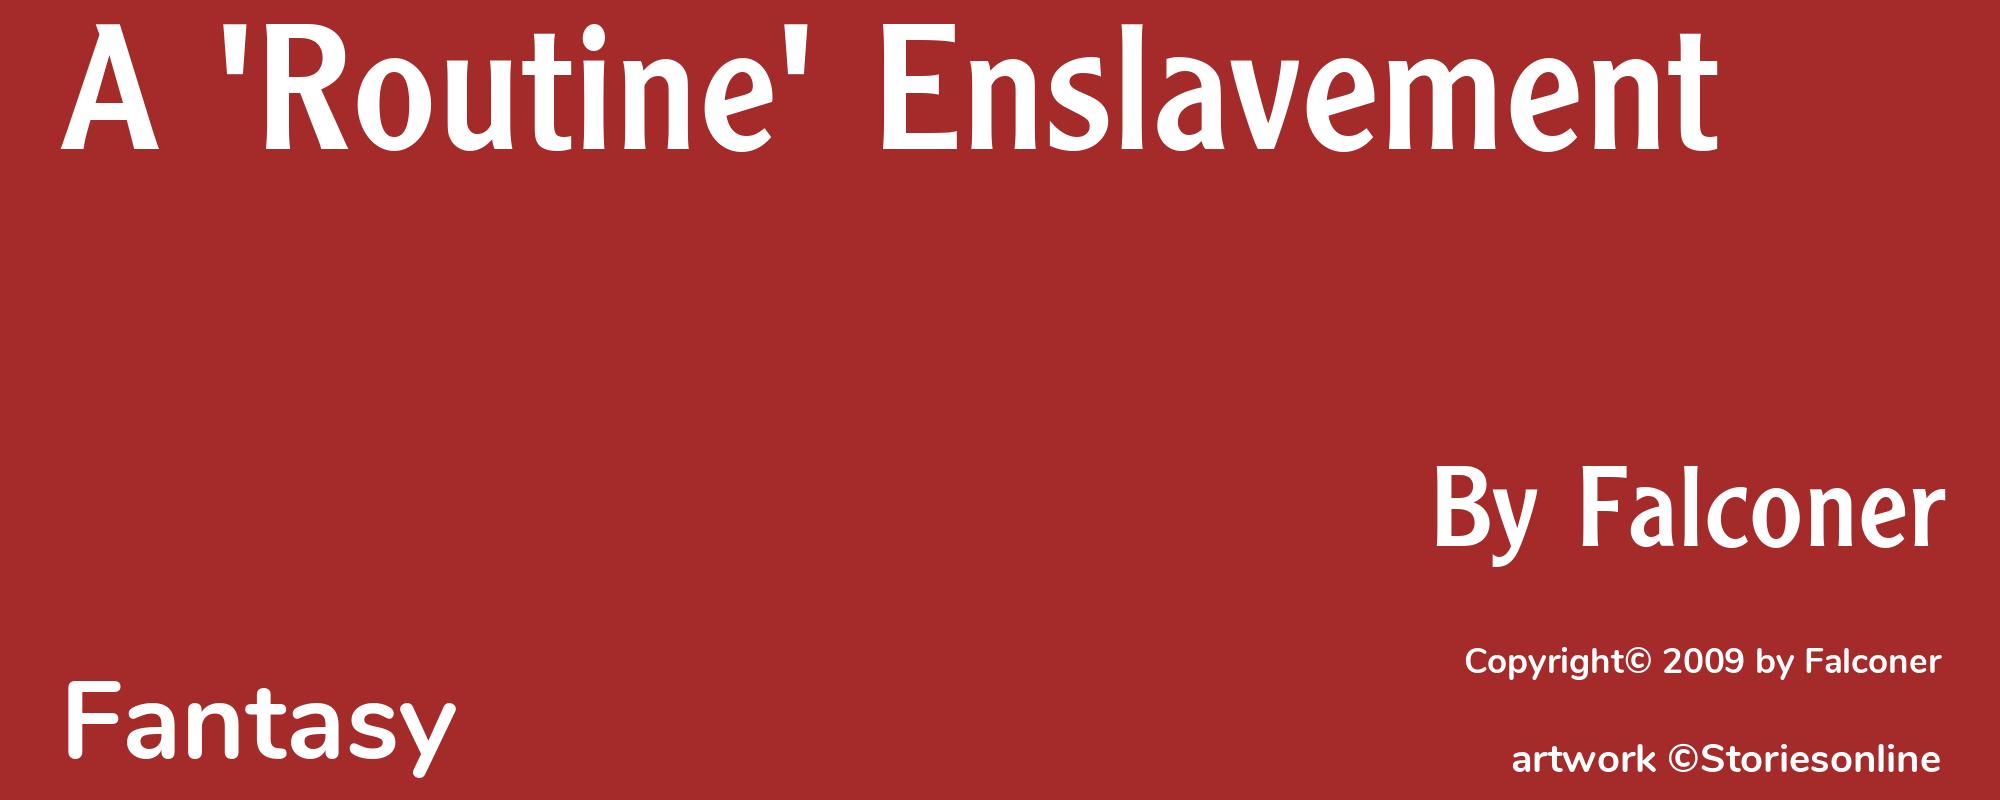 A 'Routine' Enslavement - Cover